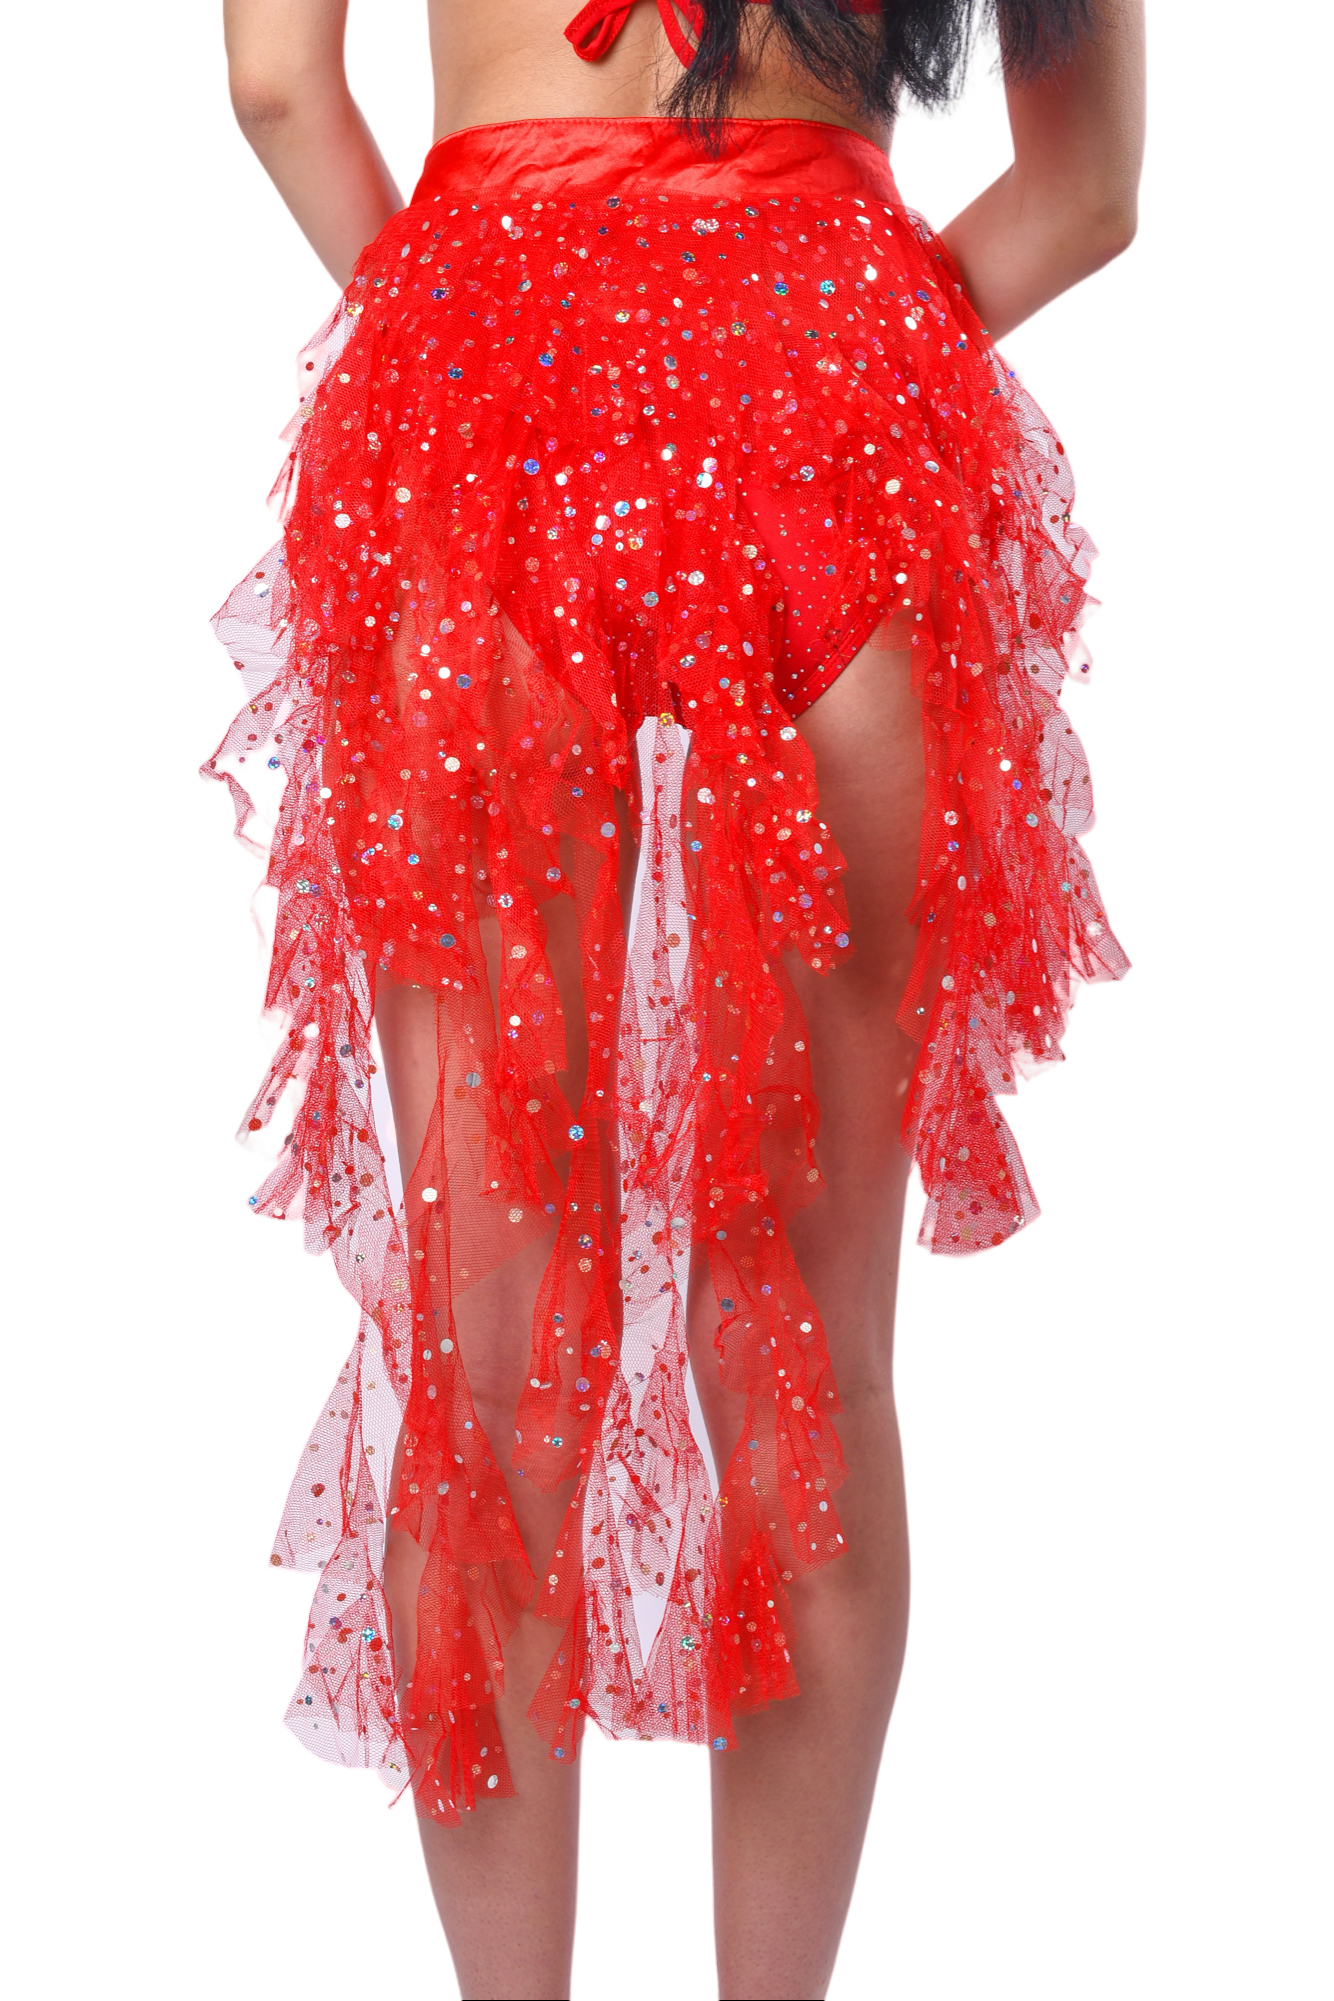 Flaming Hot Lace Long Skirt